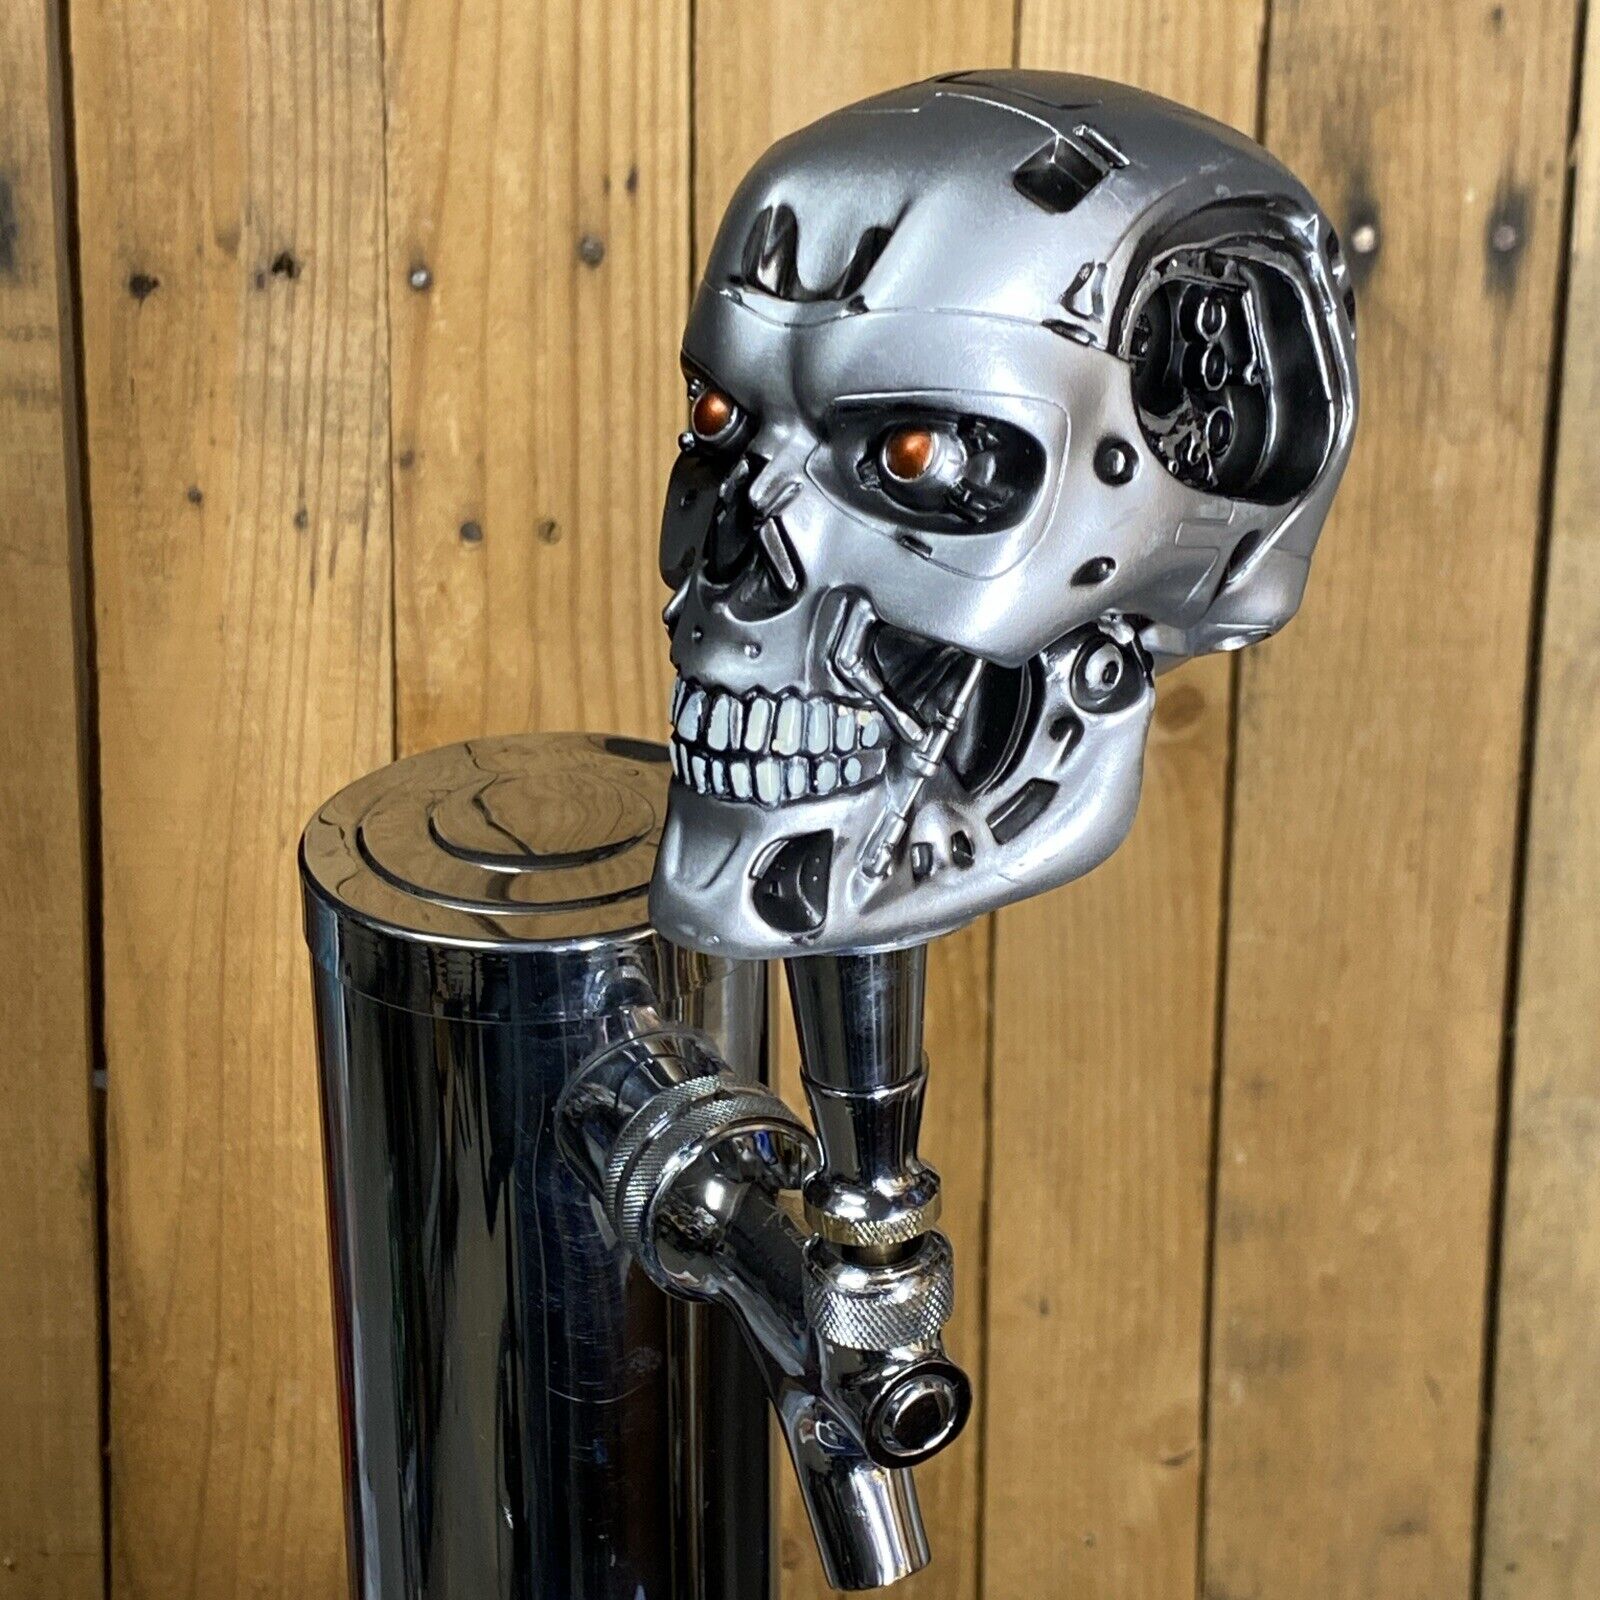 The Terminator Tap Handle For Beer Keg Sci Fi Movie Robot Skull Cyborg Skeleton